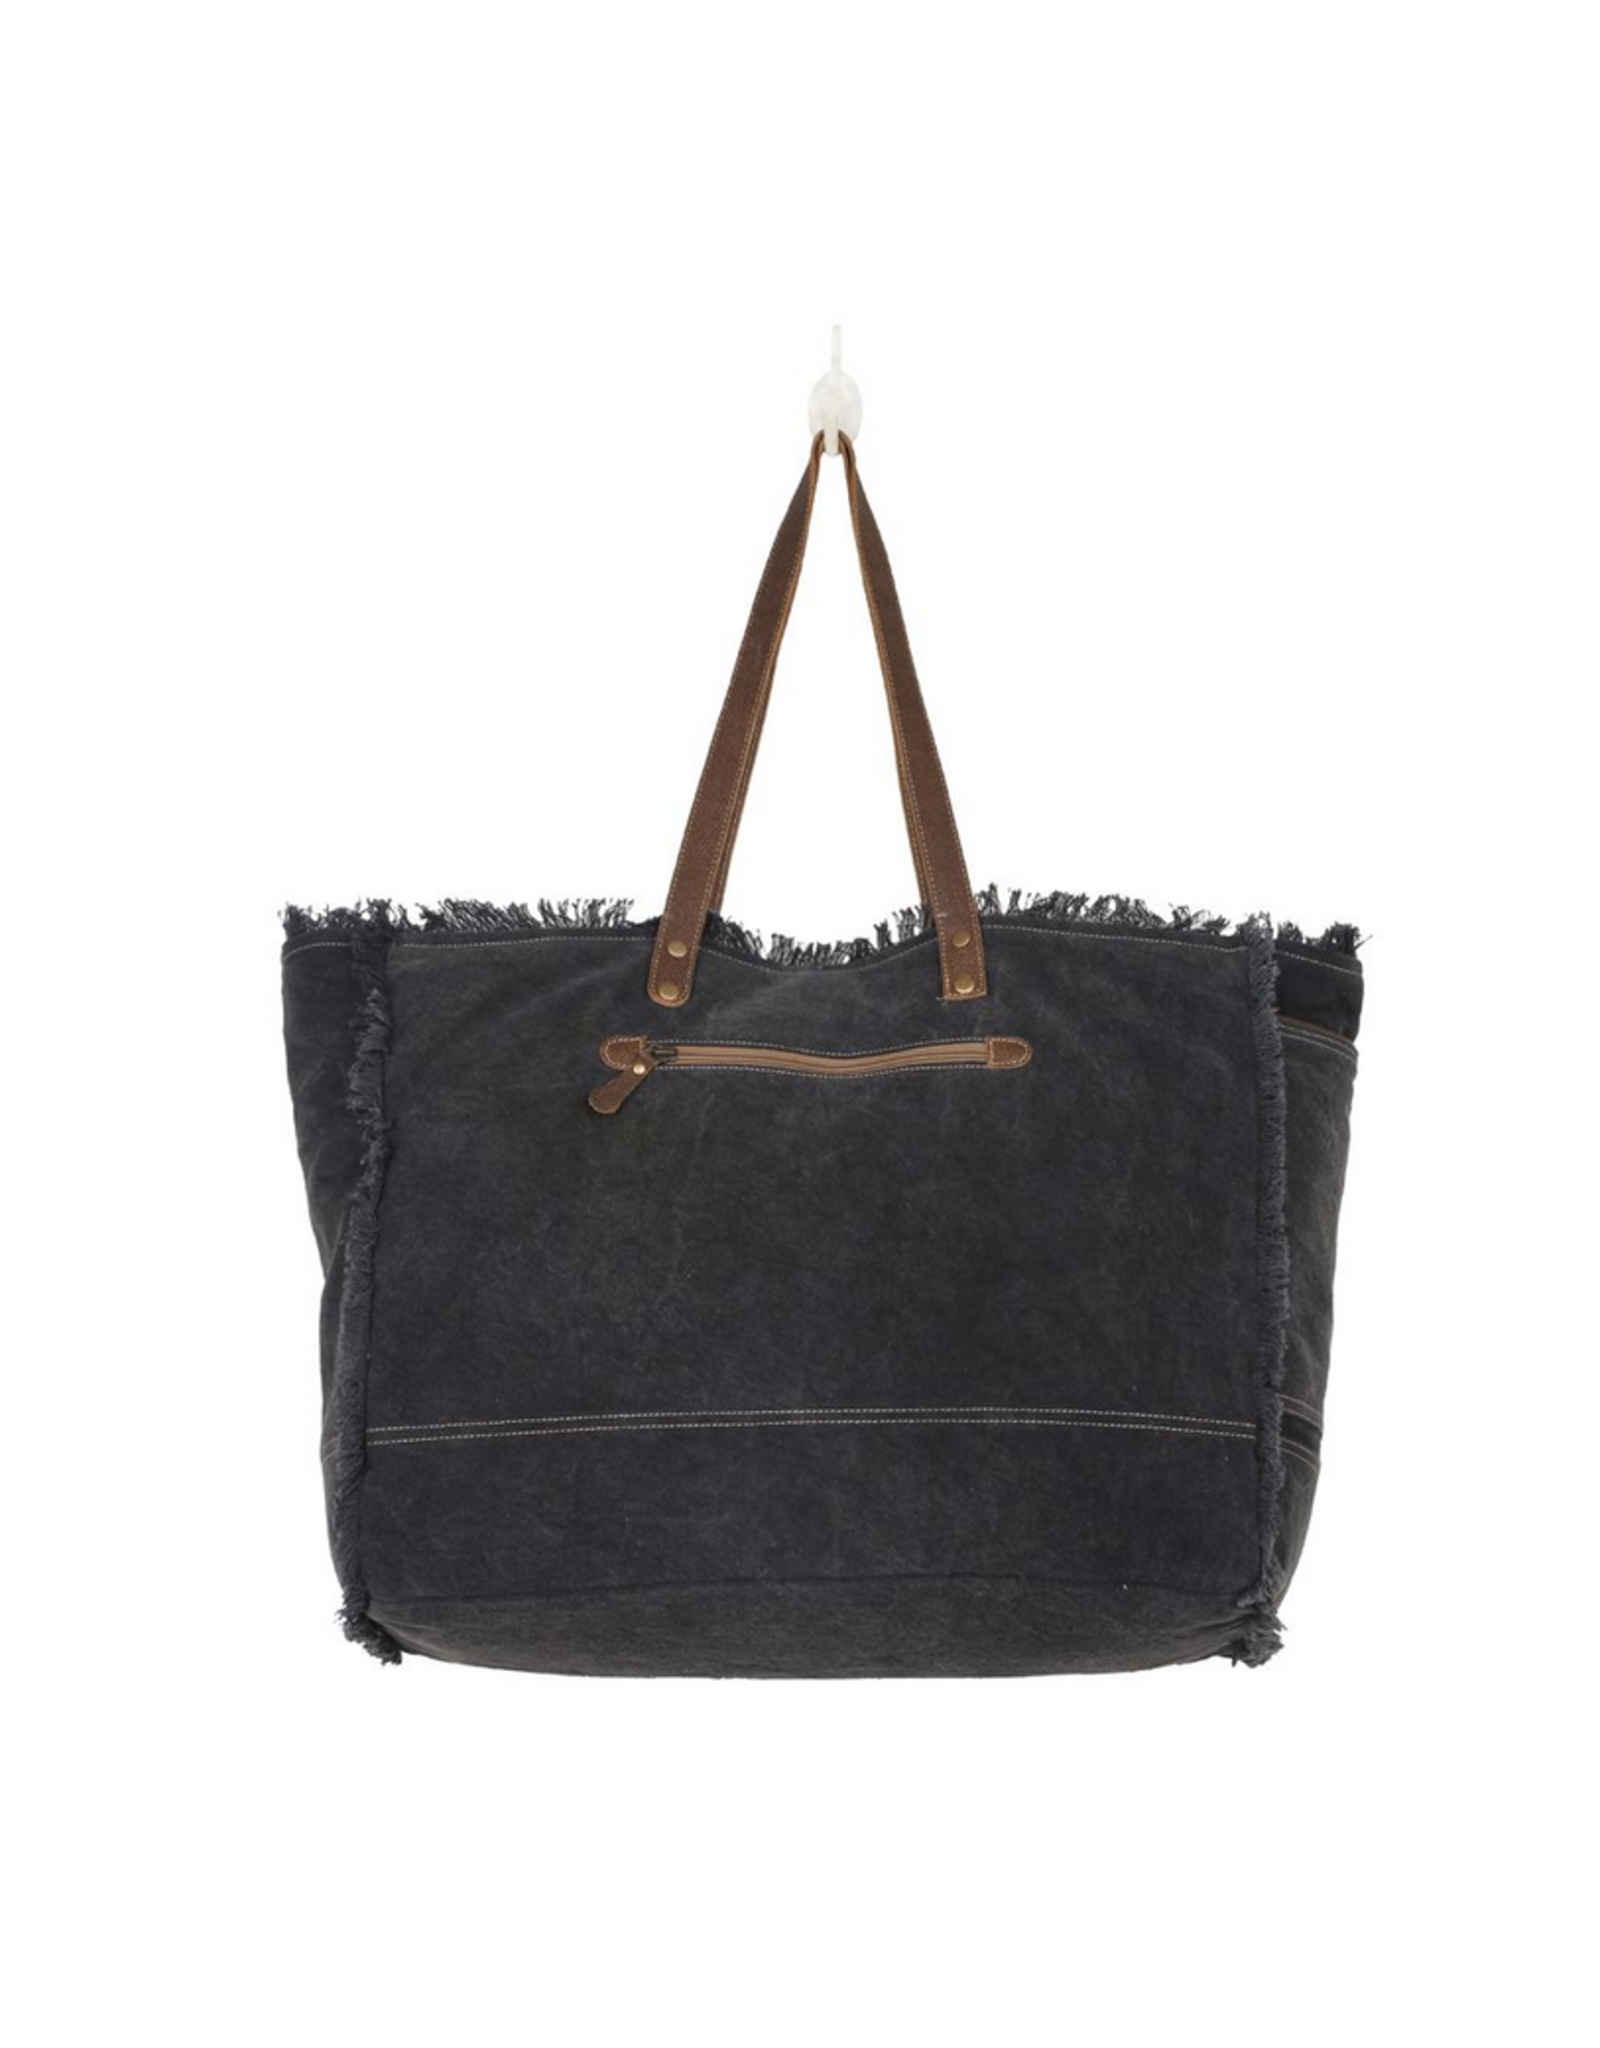 Myra Myra S-2531 Black Fern Weekender Bag